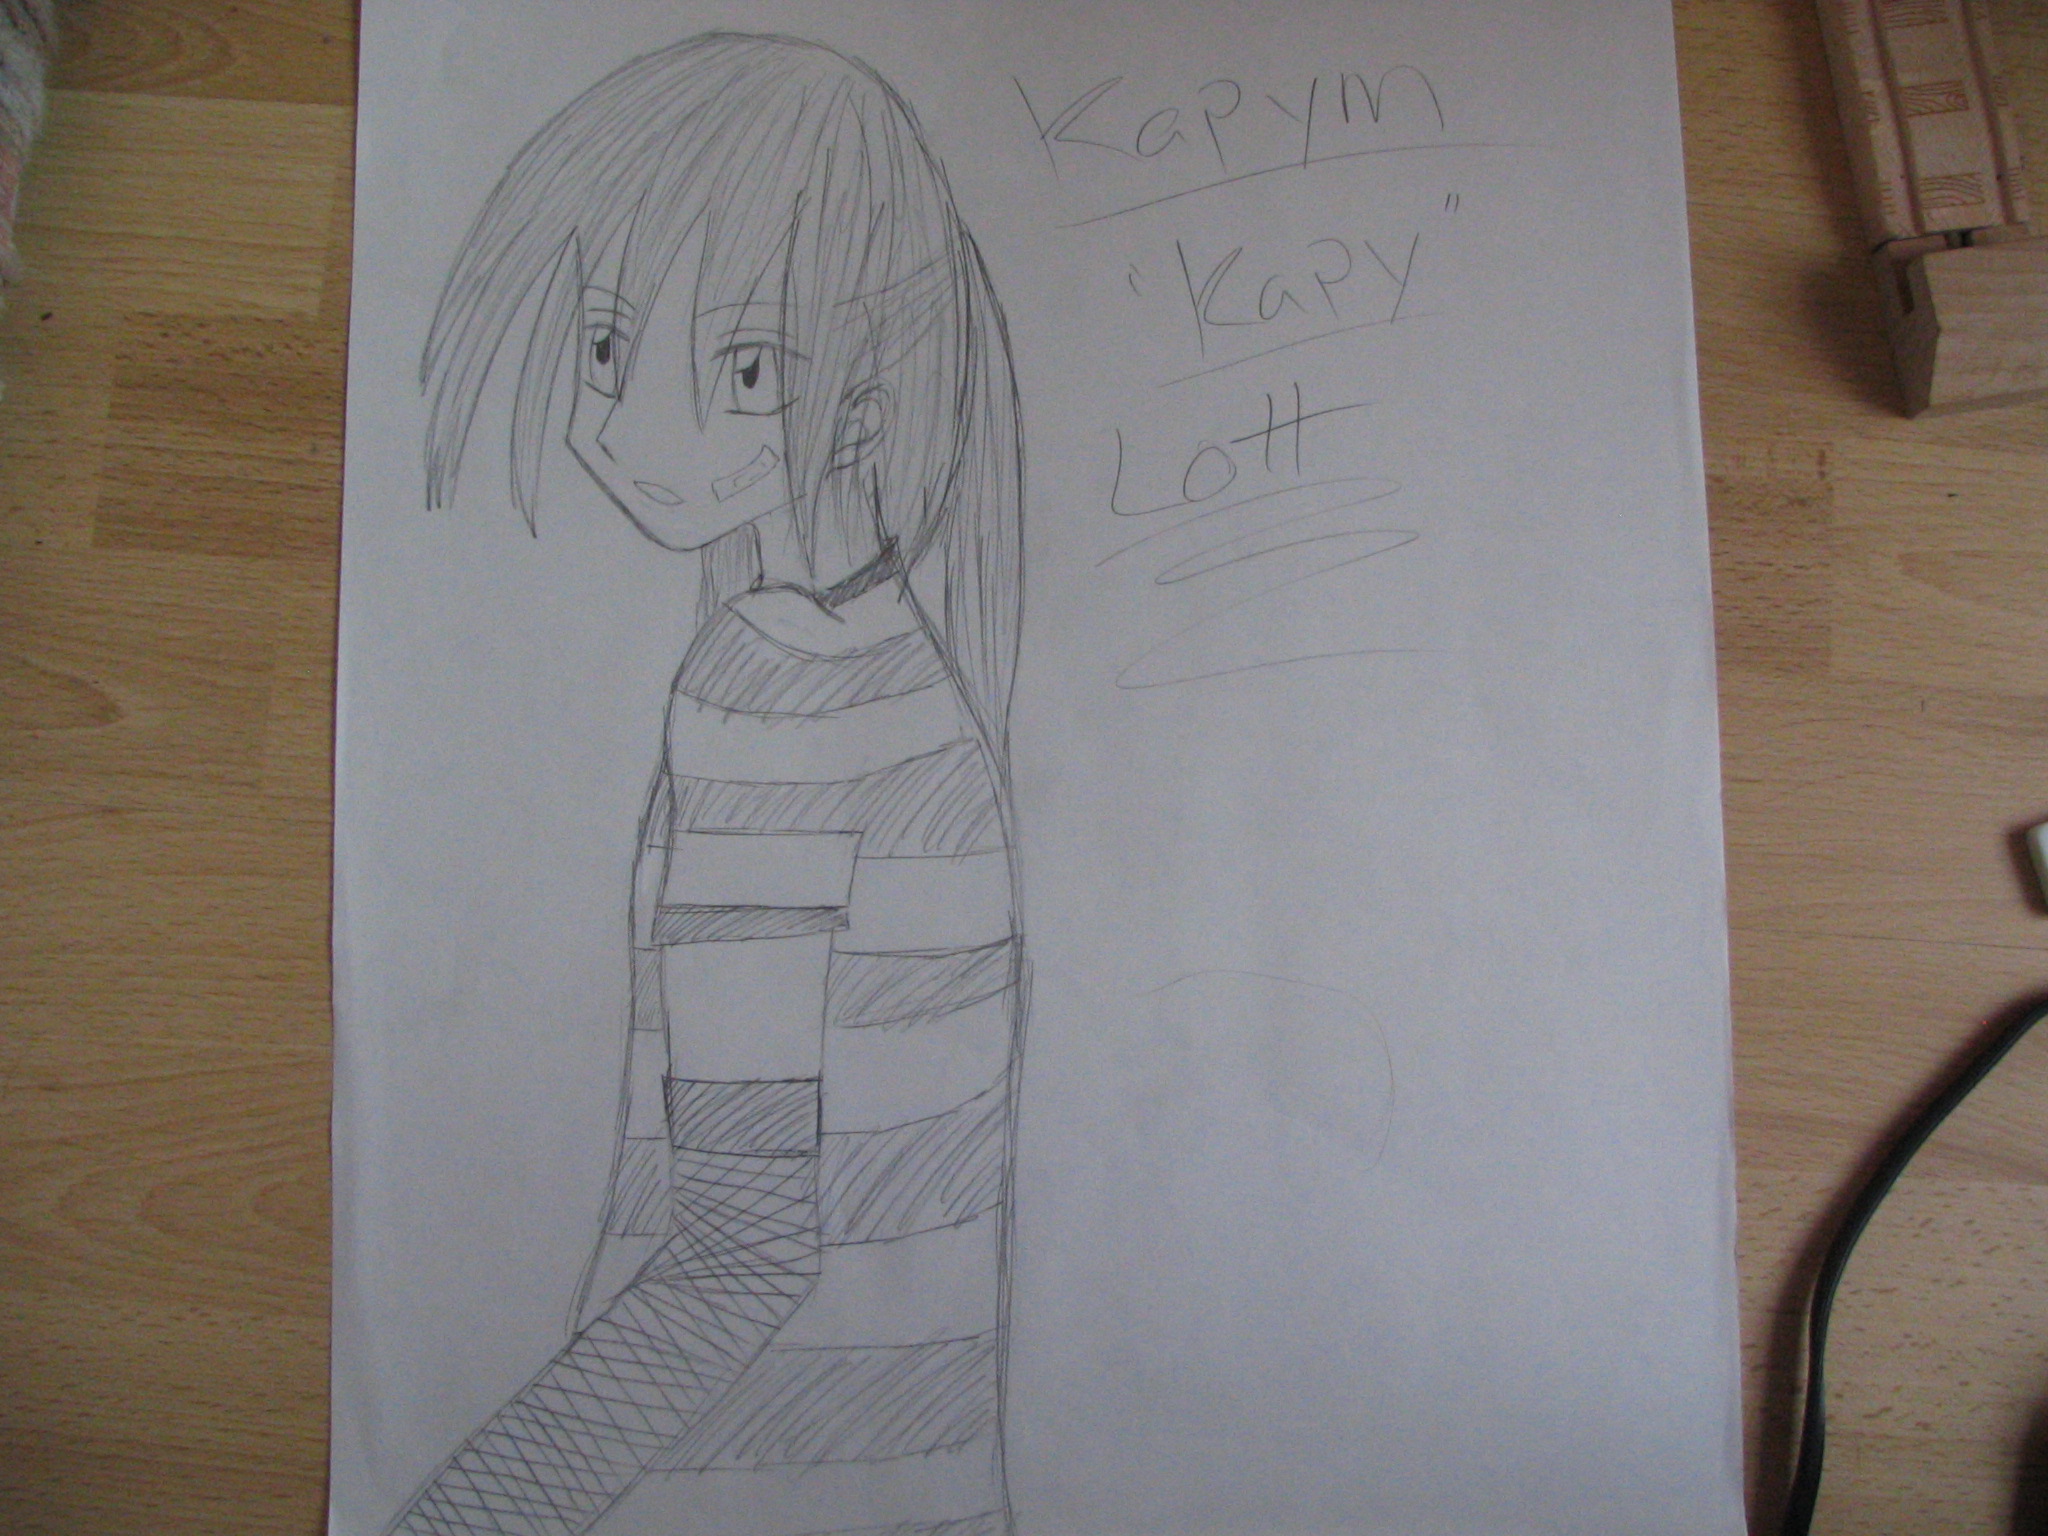 Kapym from KIAS by Linally